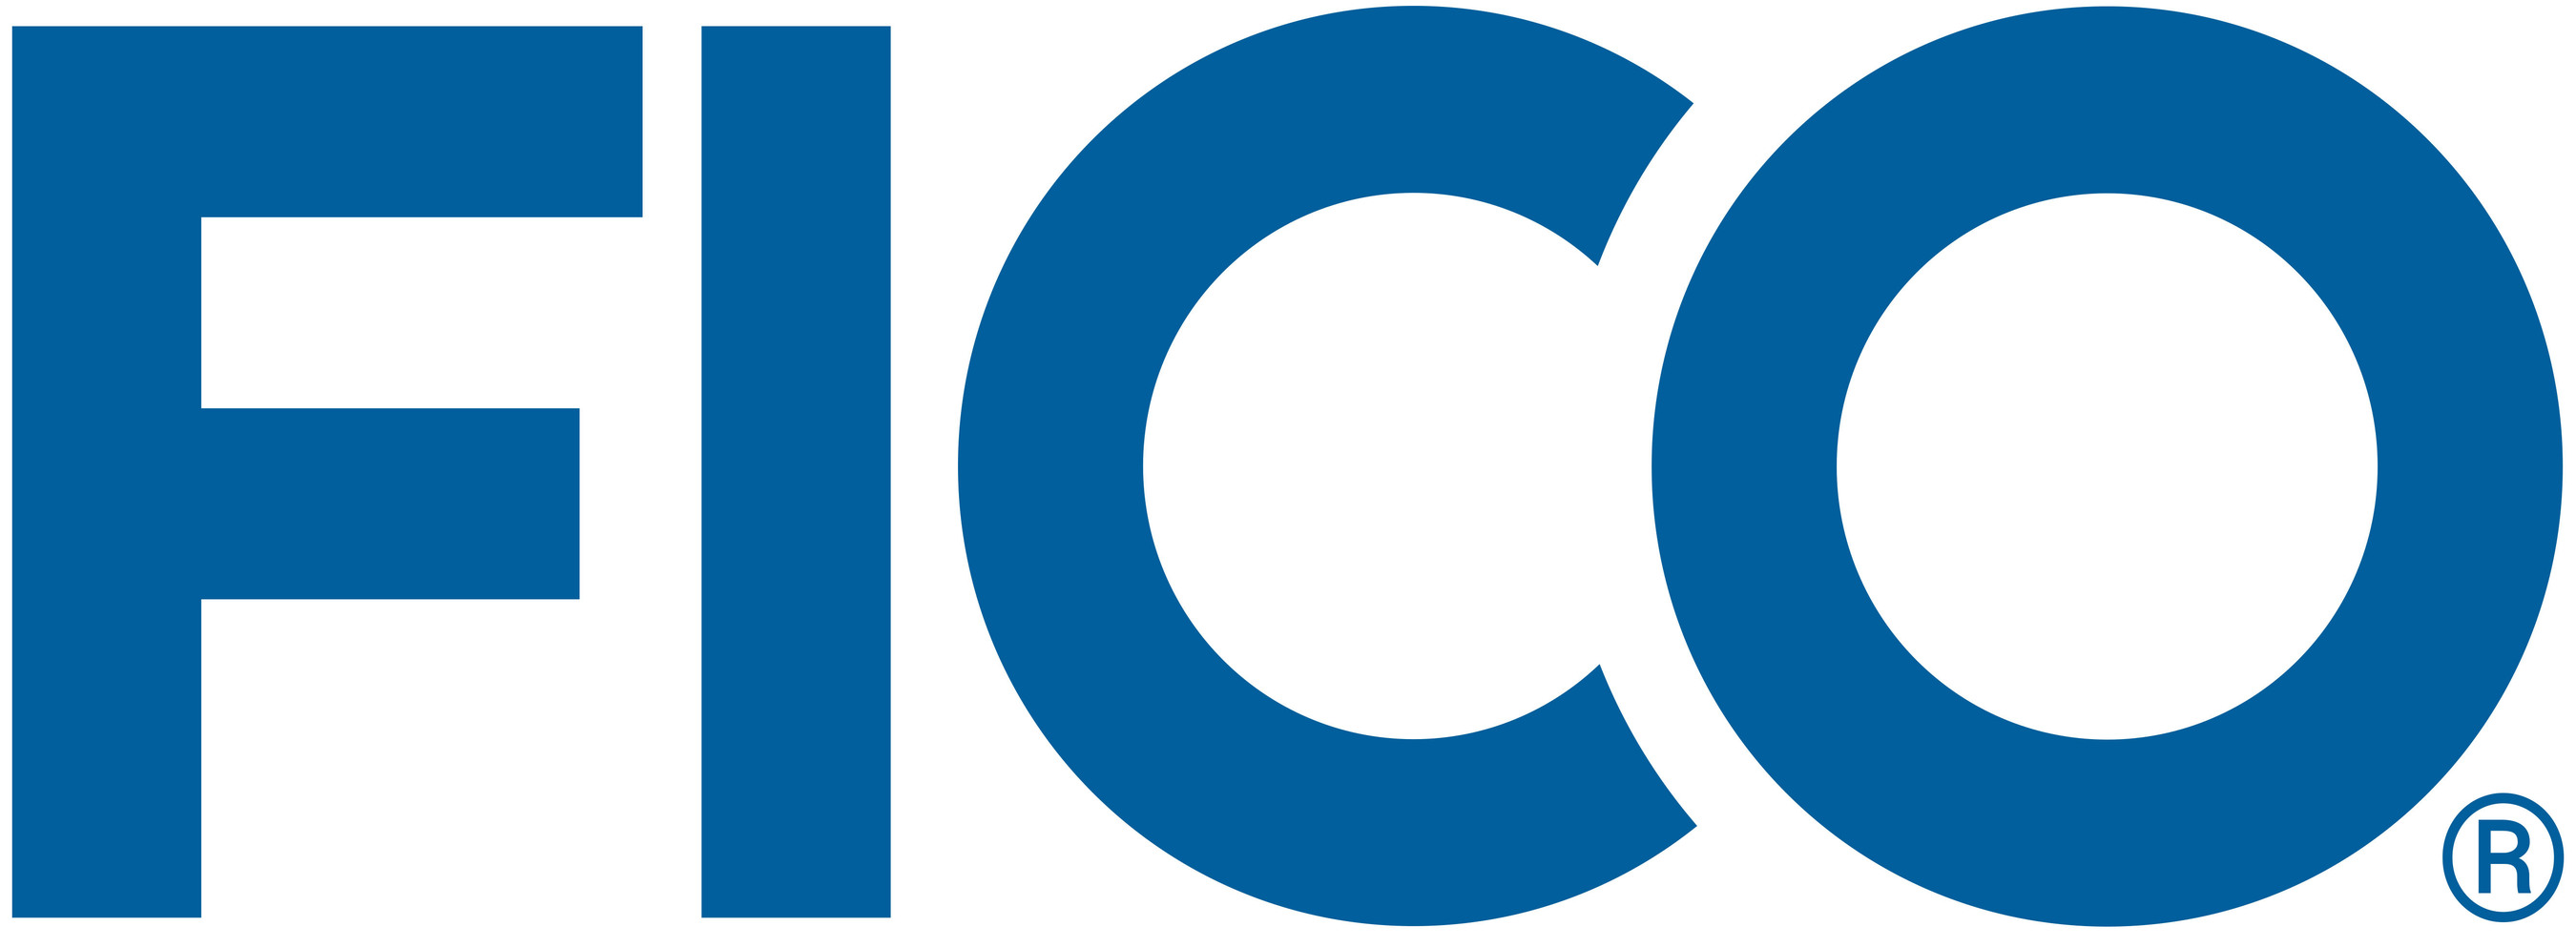 FICO Corporate logo. (PRNewsFoto/FICO) (PRNewsFoto/)